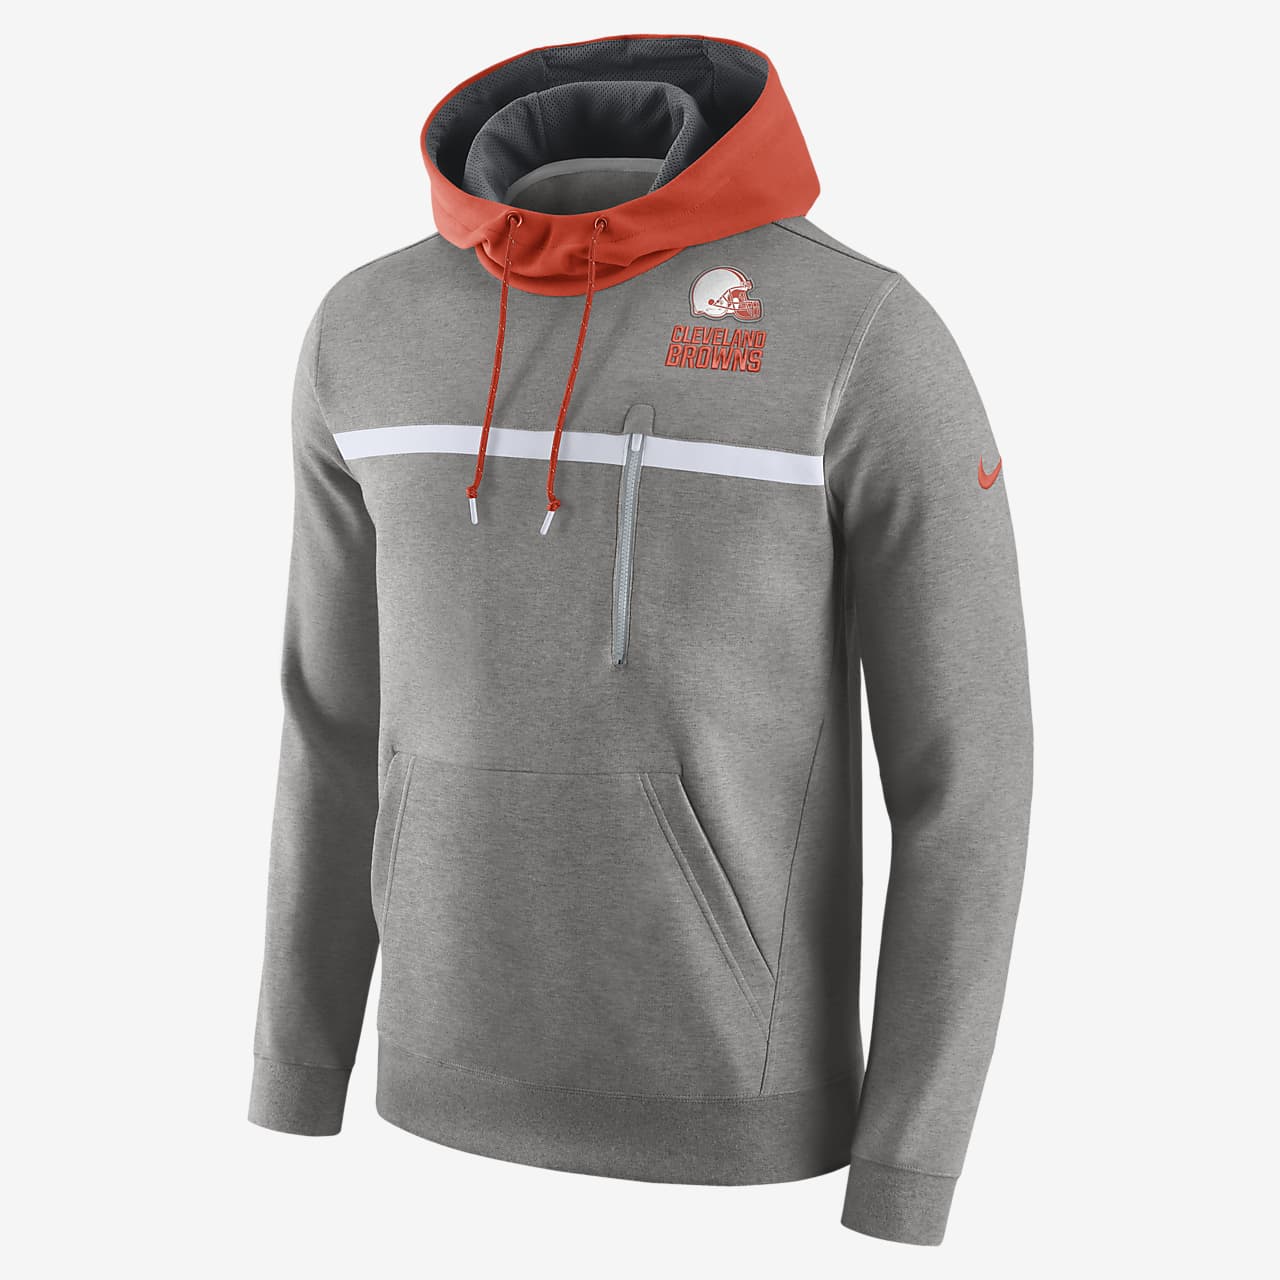 Nike Championship Drive Sweatshirt (NFL Browns) Men's Hoodie